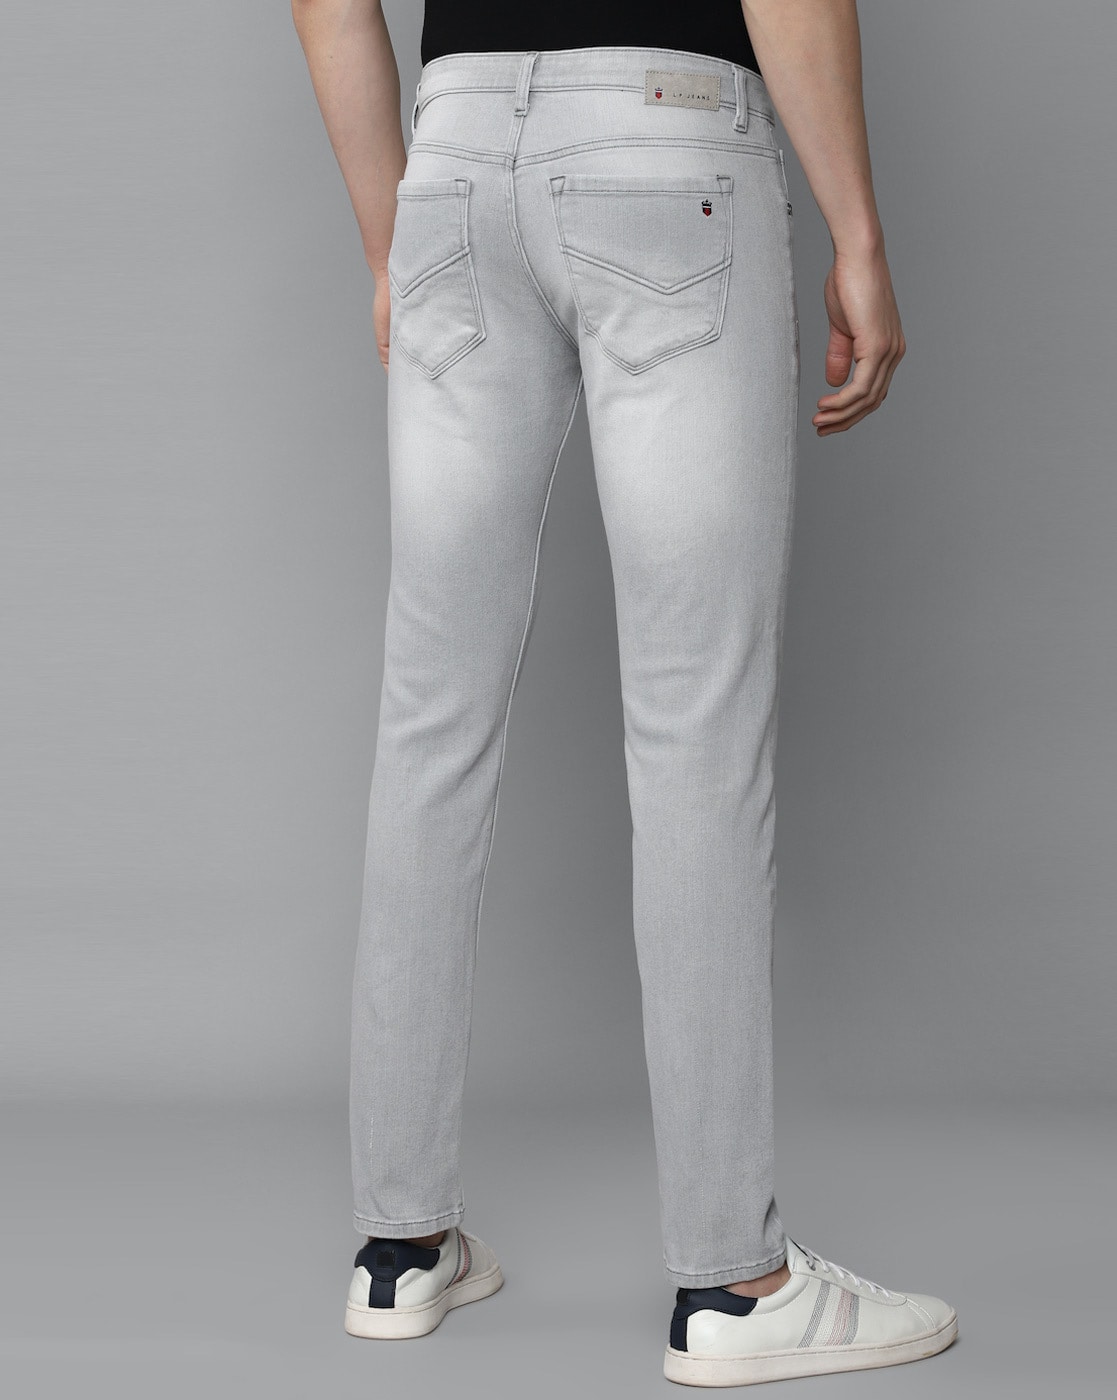 Buy Light Grey Slim Jeans For Men at Great Price – Rockstar Jeans